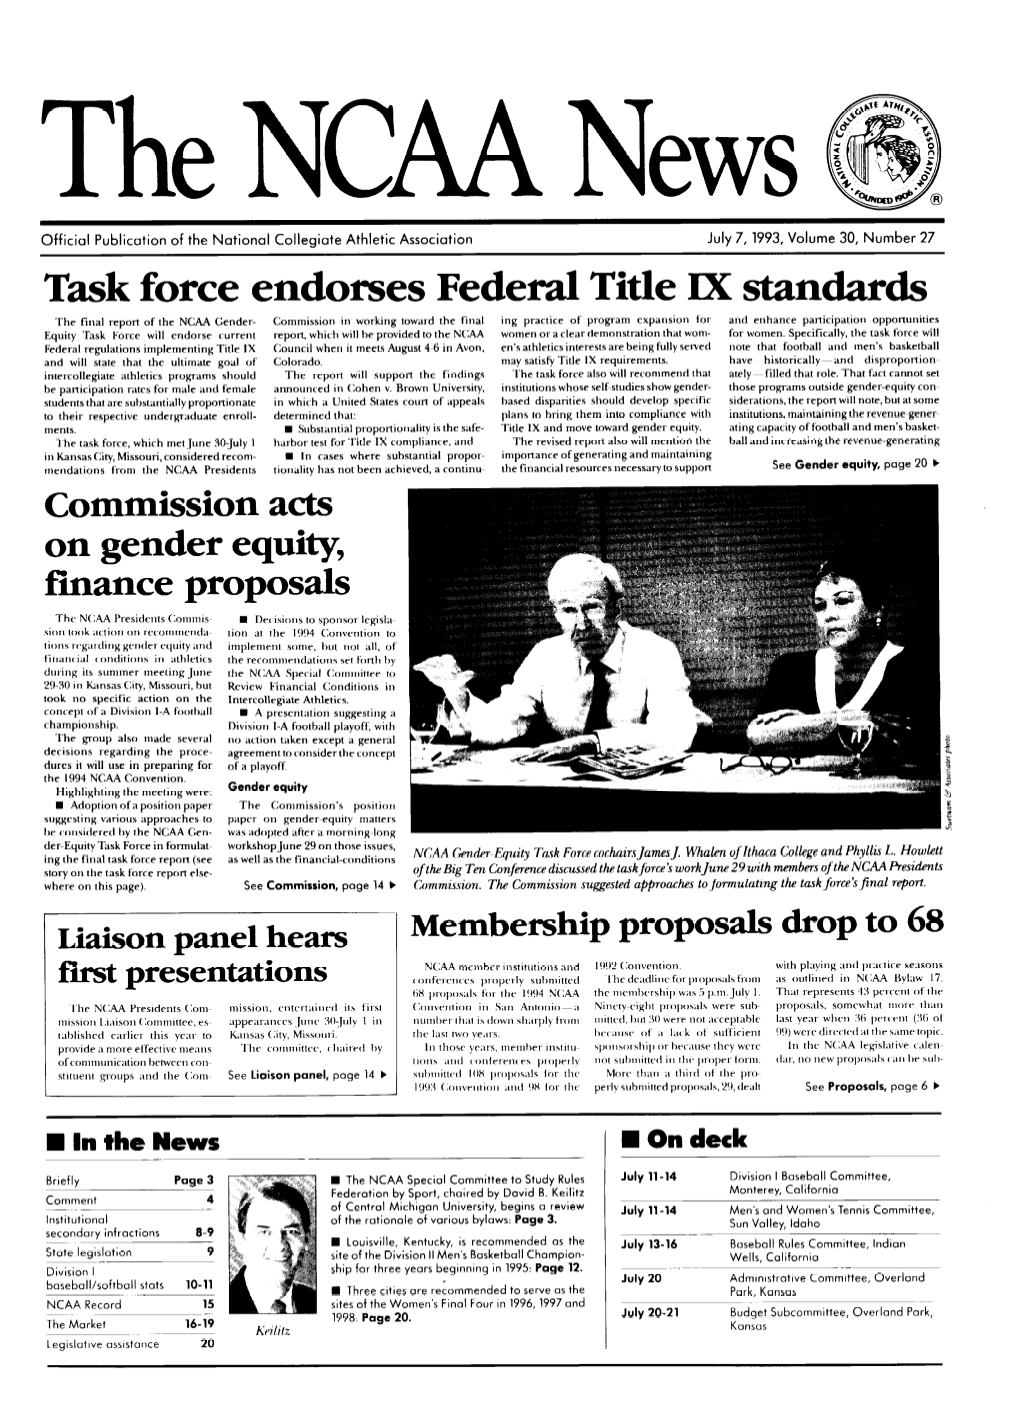 Task Force Endorses Federal Title Ix